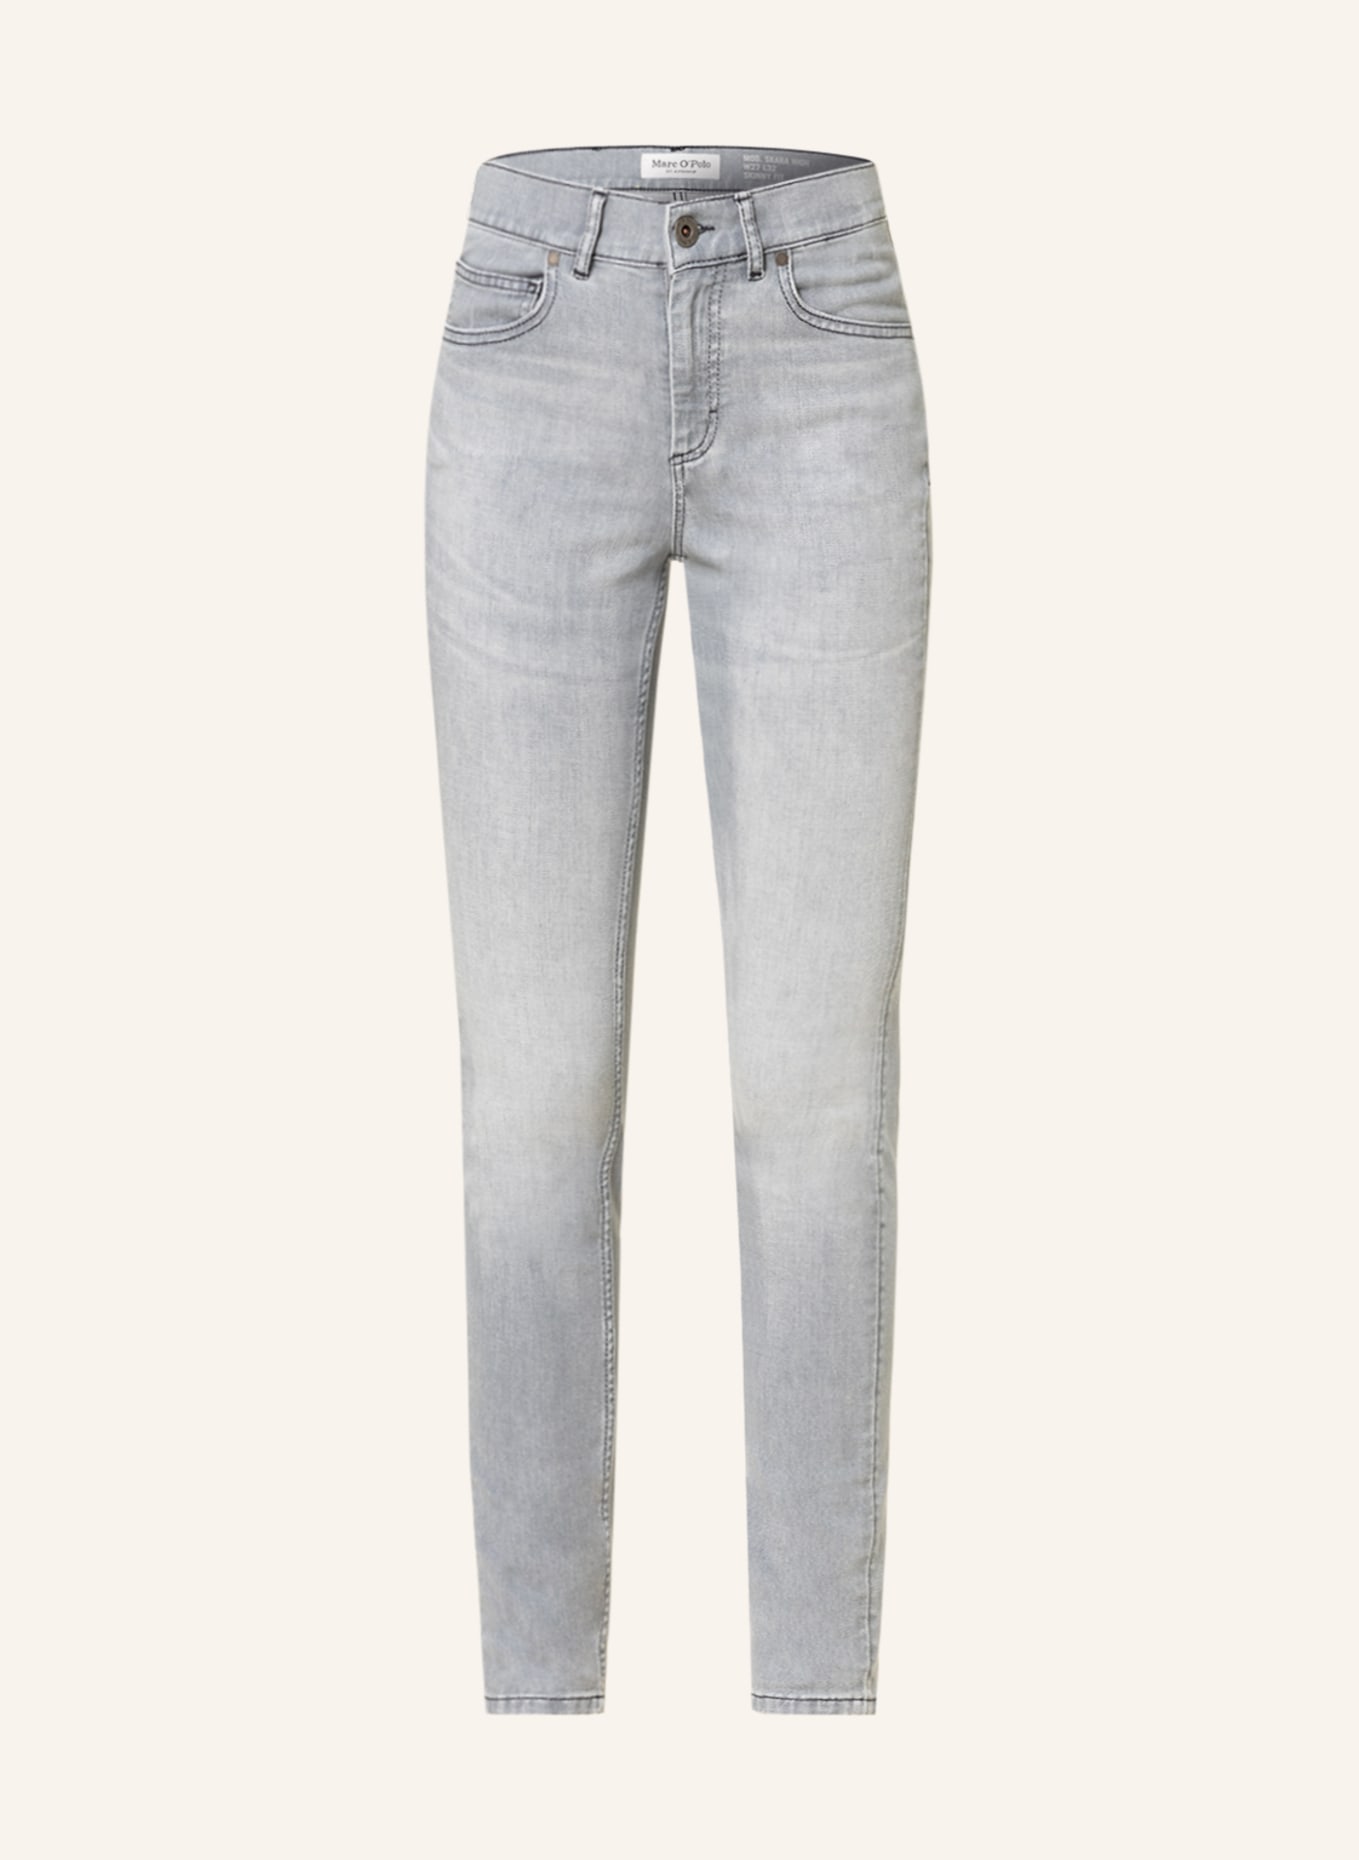 Marc O'Polo Skinny Jeans, Farbe: 007 Comfort light grey wash (Bild 1)